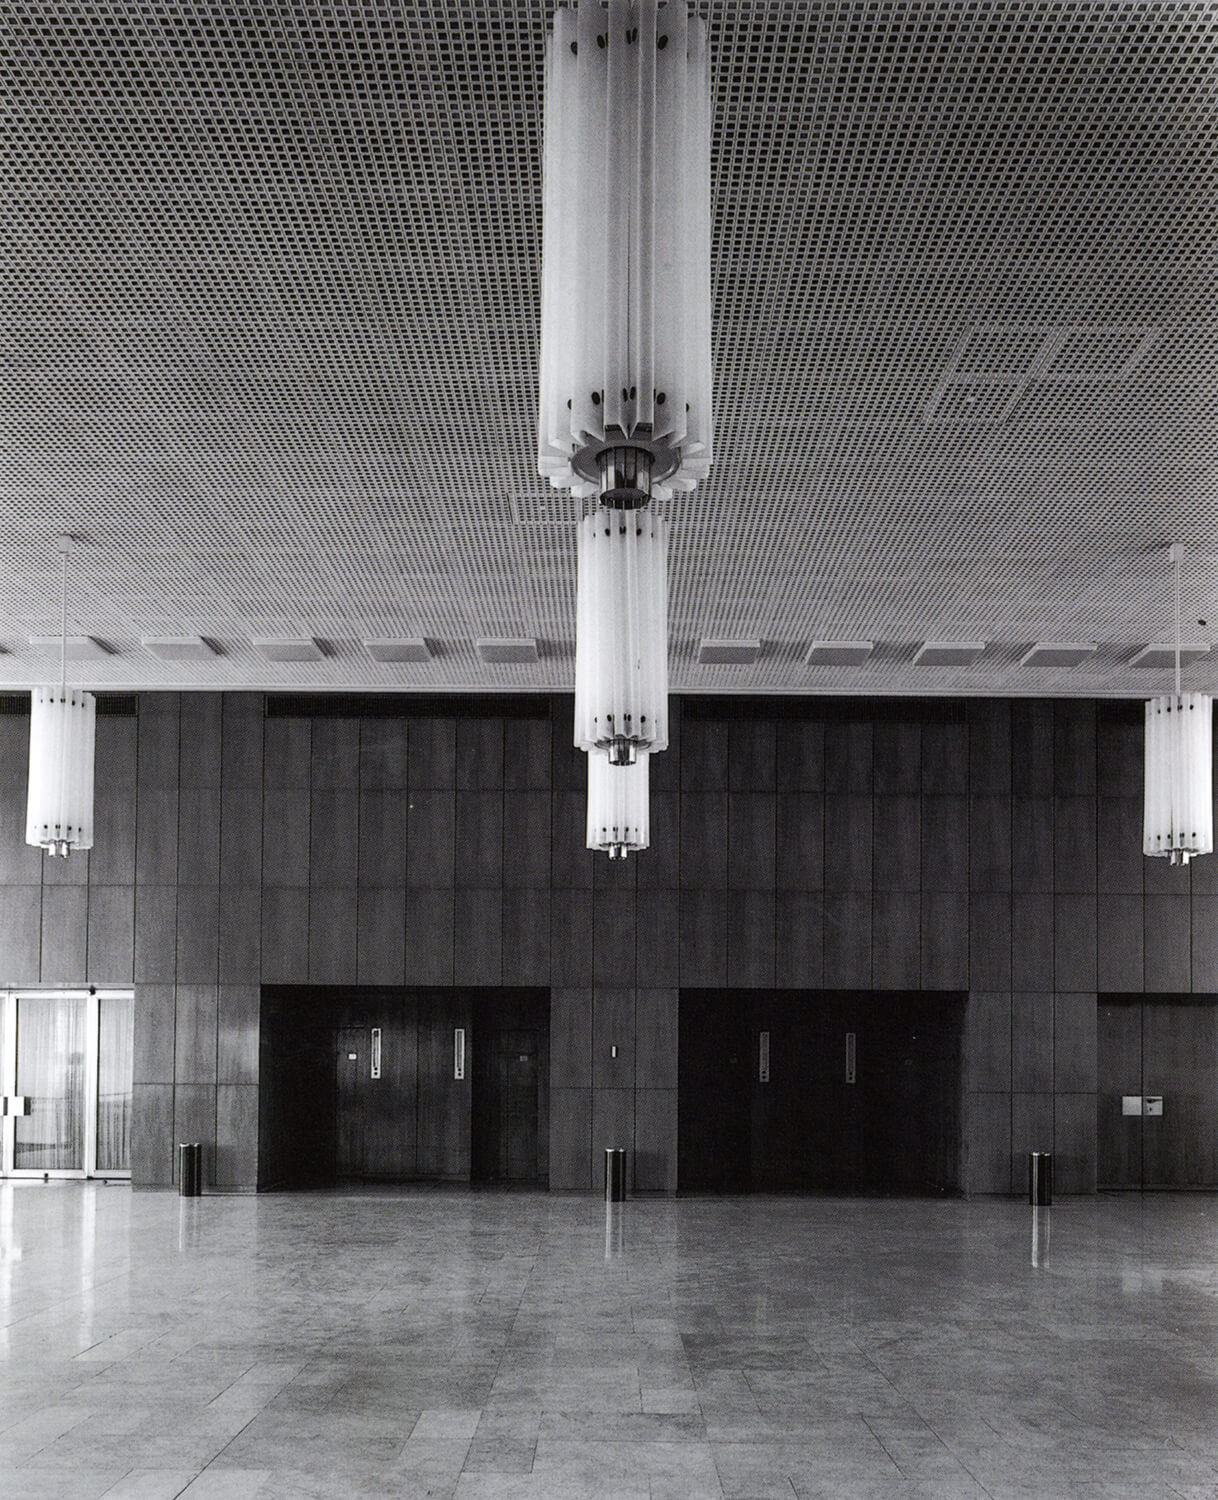 Doug Hall, Staatsratsgebäude, Foyer, 2. Etage, 1992, Silbergelatine-Print, 1/5, 156 x 123 cm, gerahmt